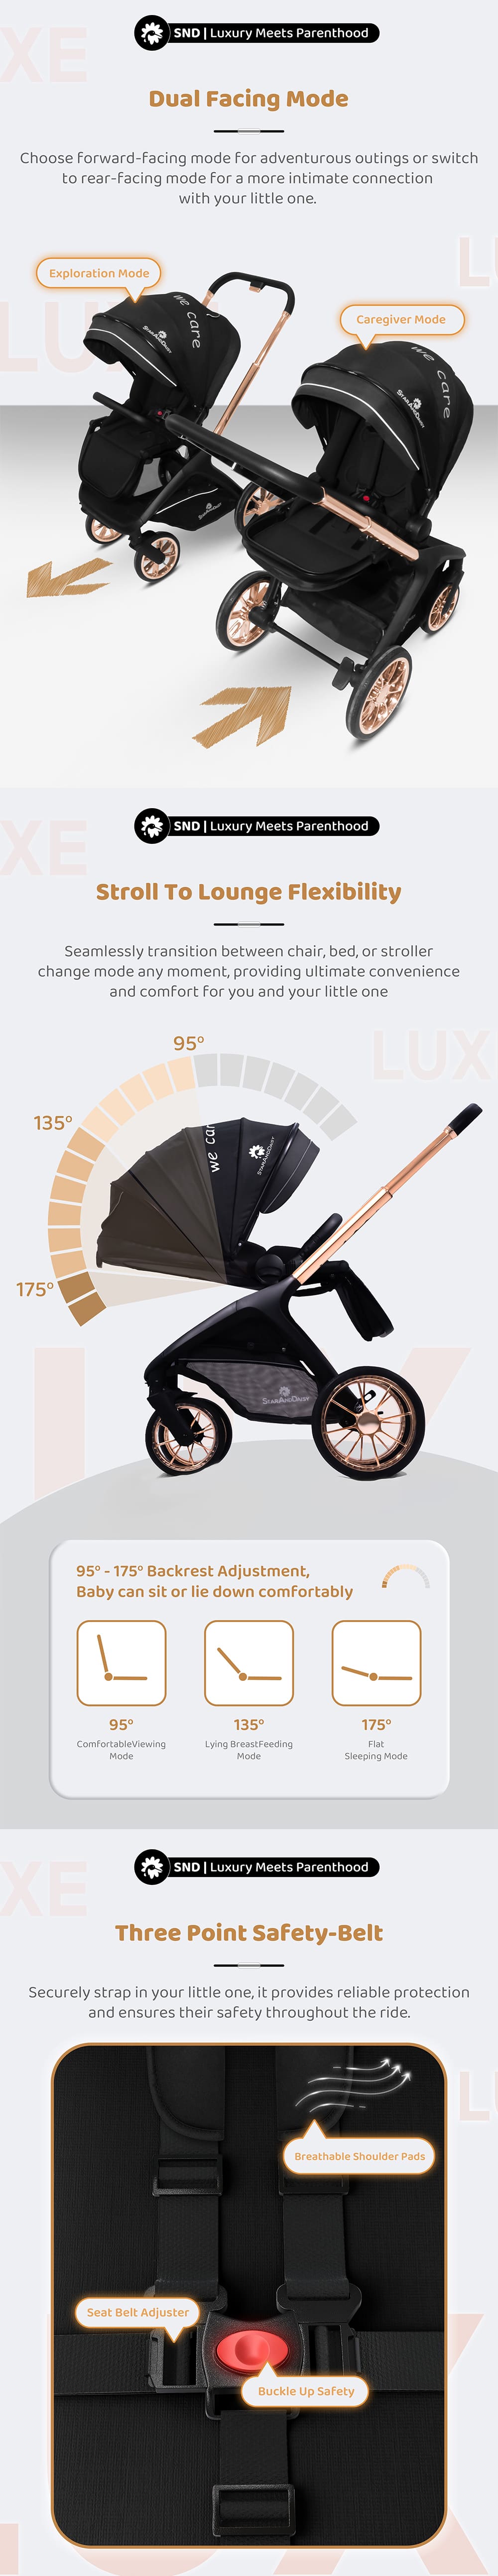 Best Lightweight Luxe Baby Stroller for Travel